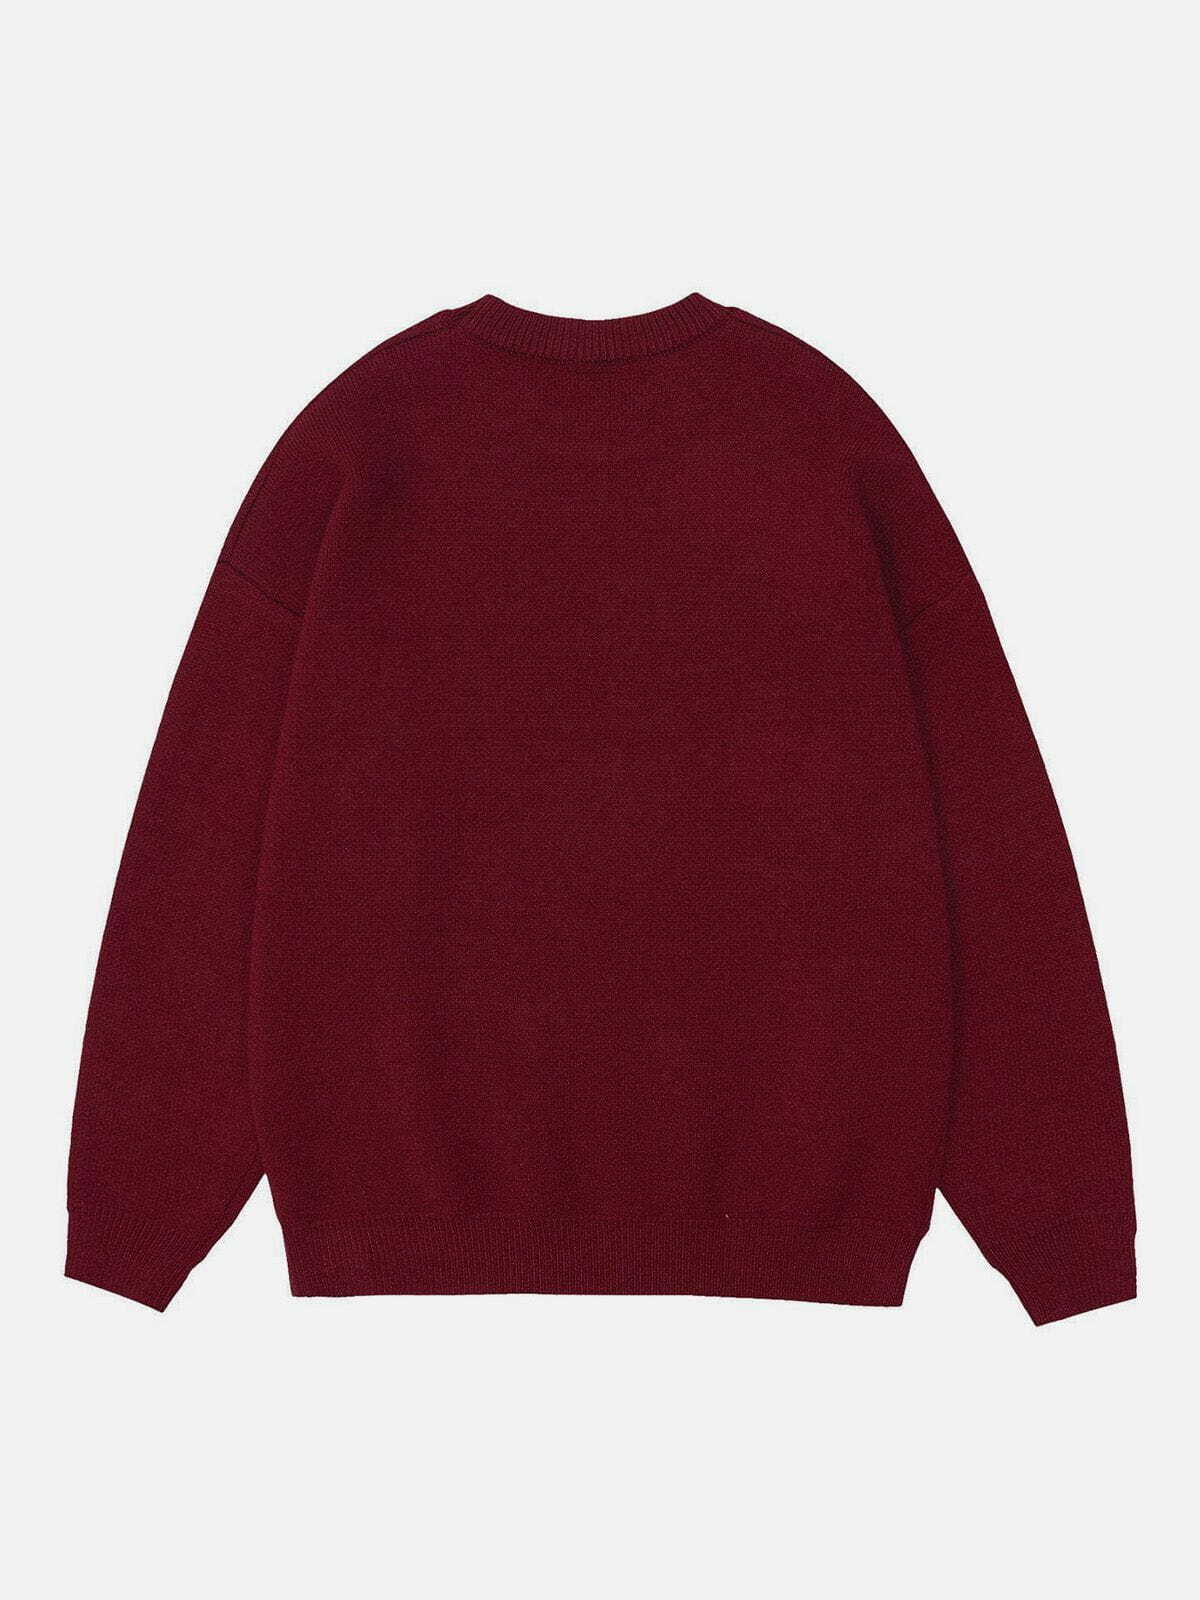 tiger print knit sweater edgy & vibrant streetwear 7426